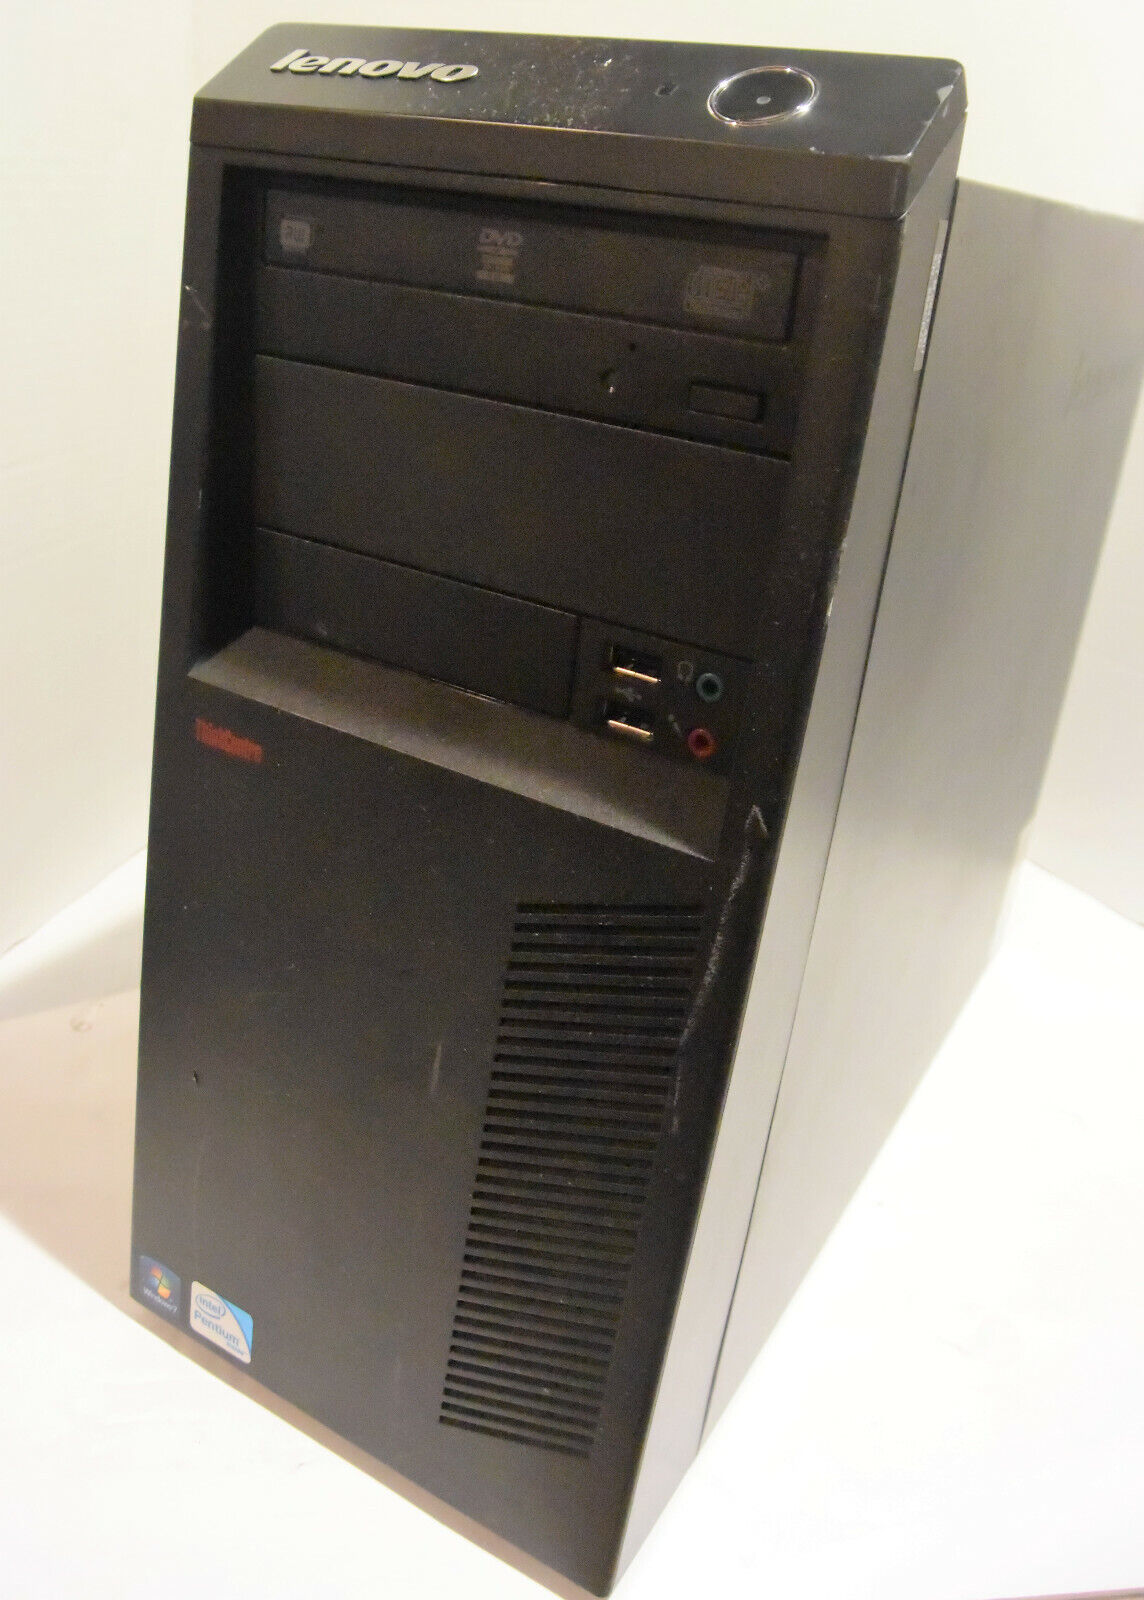 Lenovo Thinkcentre A58e Desktop PC (Intel Pentium Dual-Core 2.6GHz 2GB NO HDD)